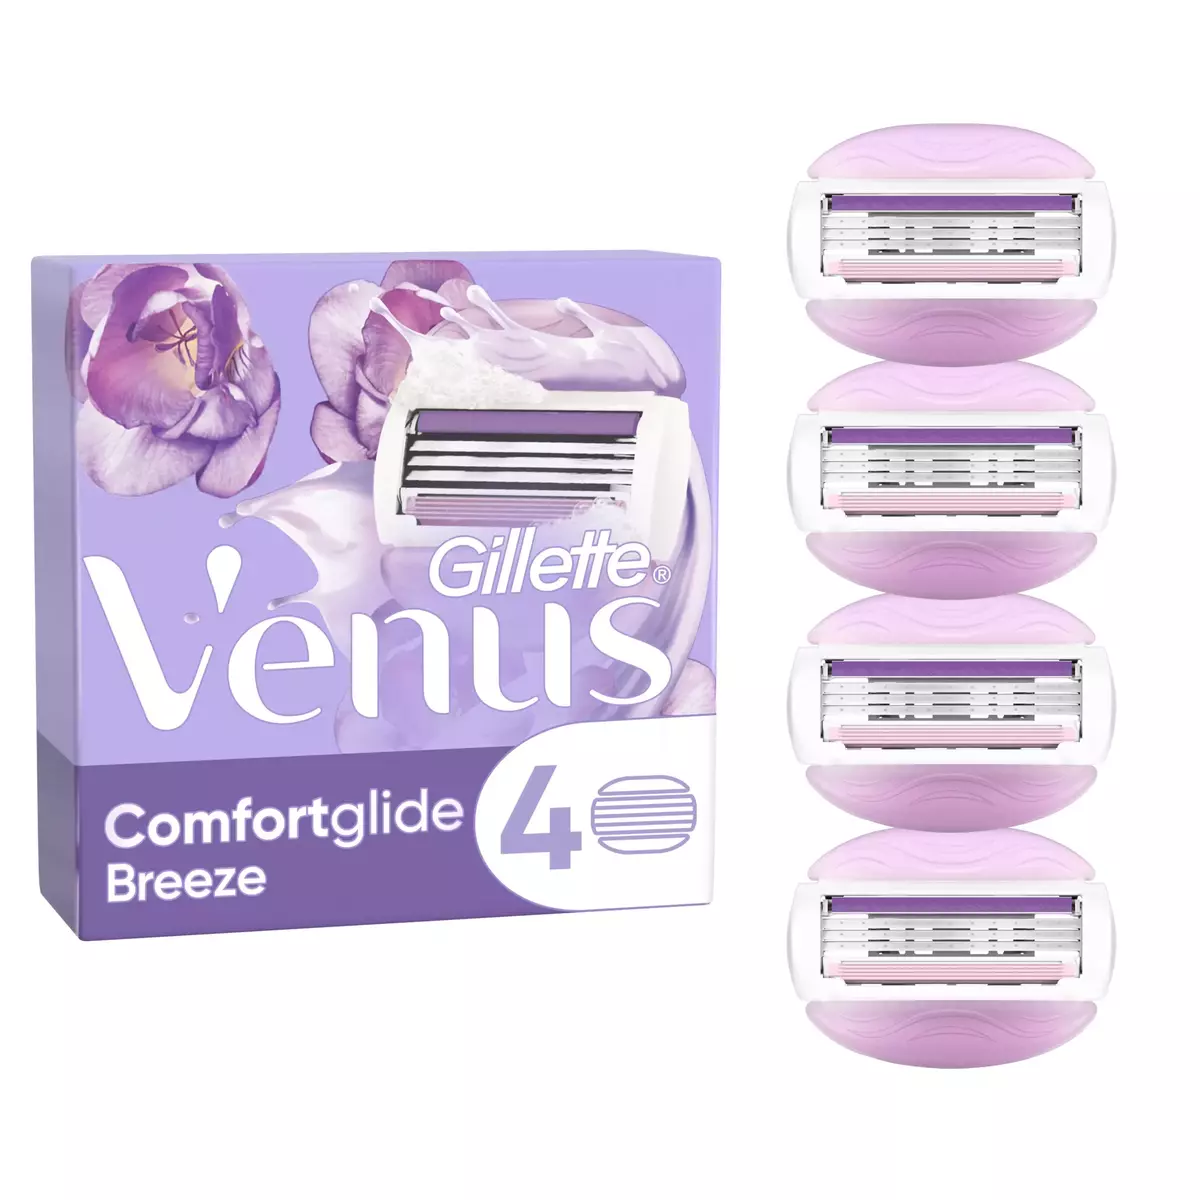 VENUS Comfort Glide Breeze Recharge lames de rasoir 3 lames 4 recharges